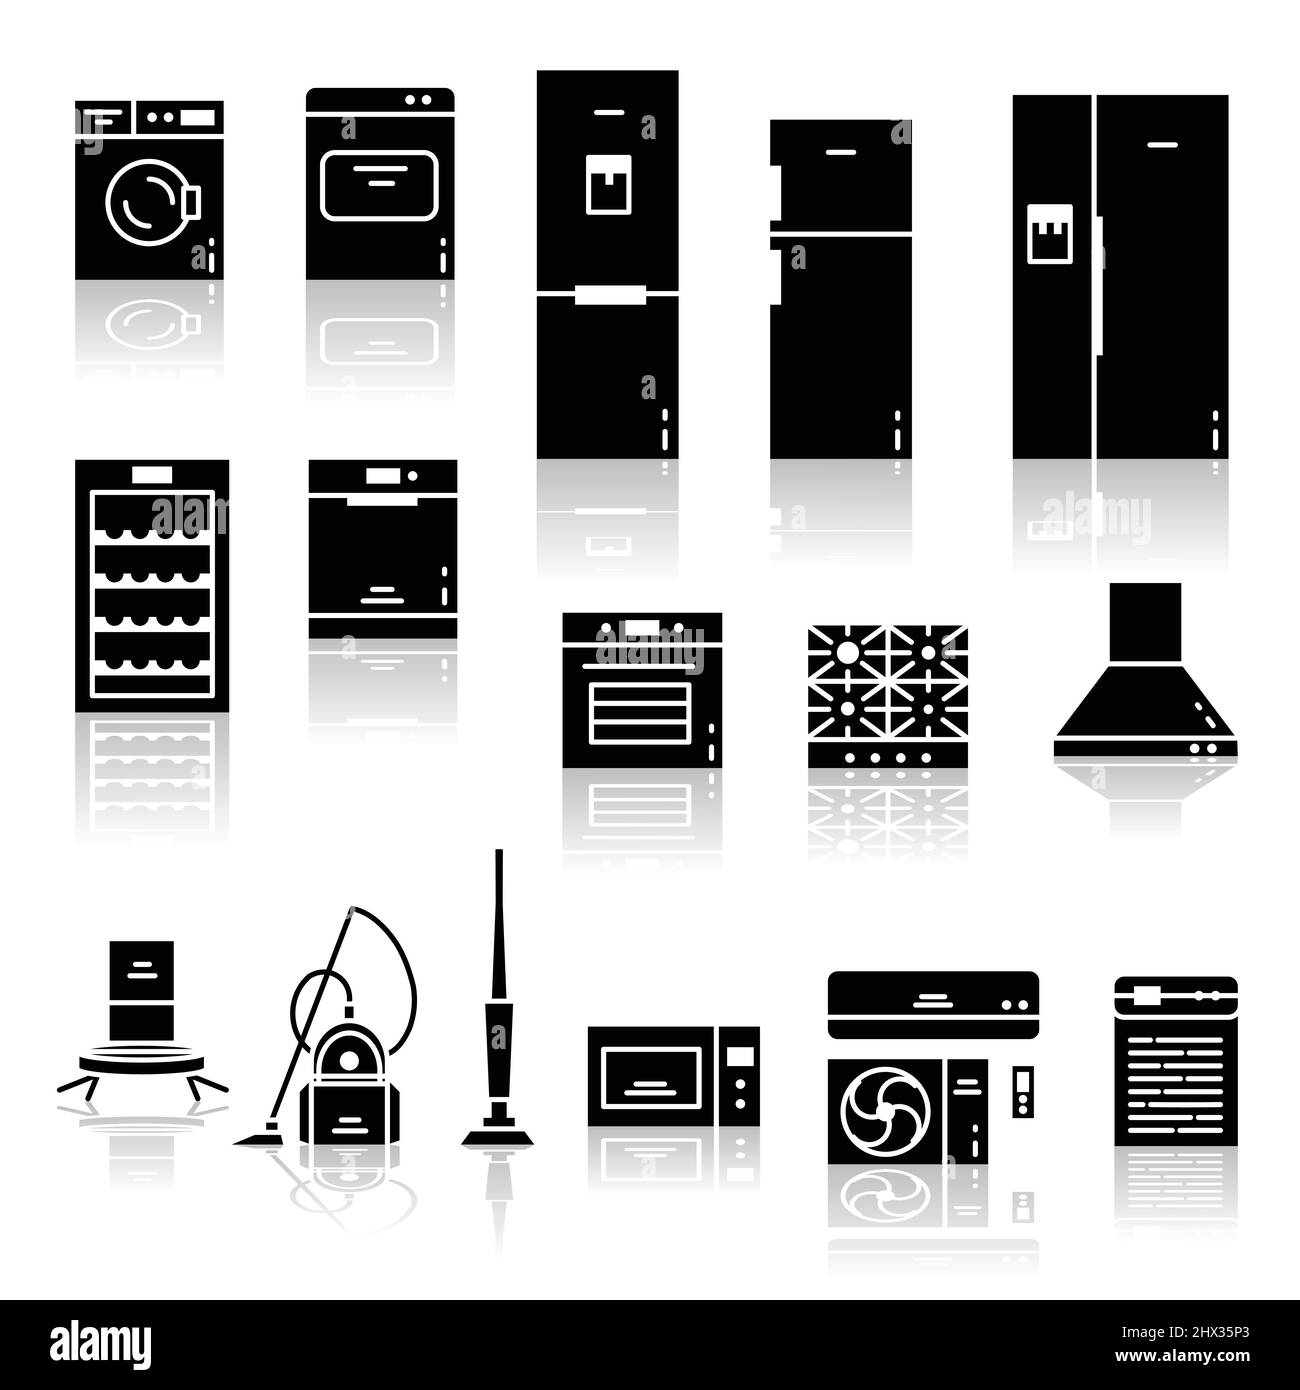 Icon-Set Für Haushaltsgeräte Im Flachen Design. Vektorgrafik Stock Vektor